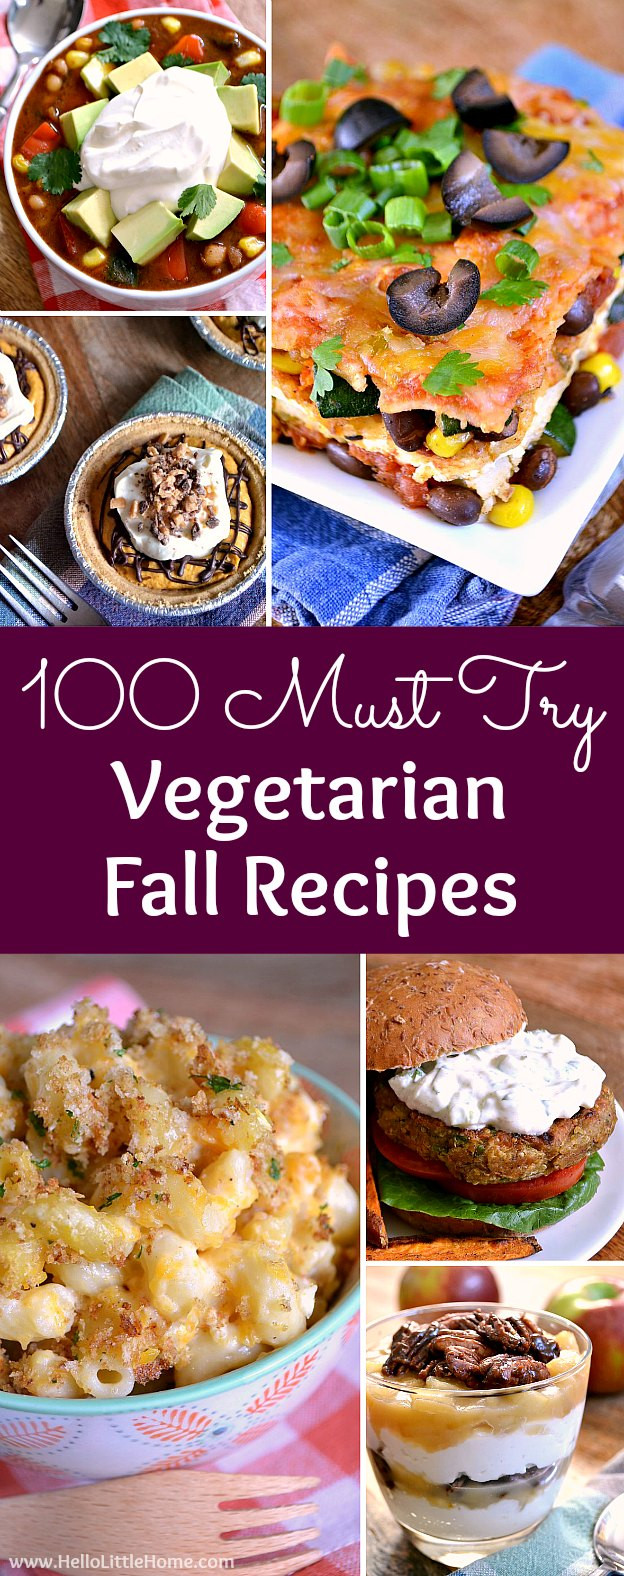 Vegetarian Fall Recipes
 100 Must Try Ve arian Fall Recipes